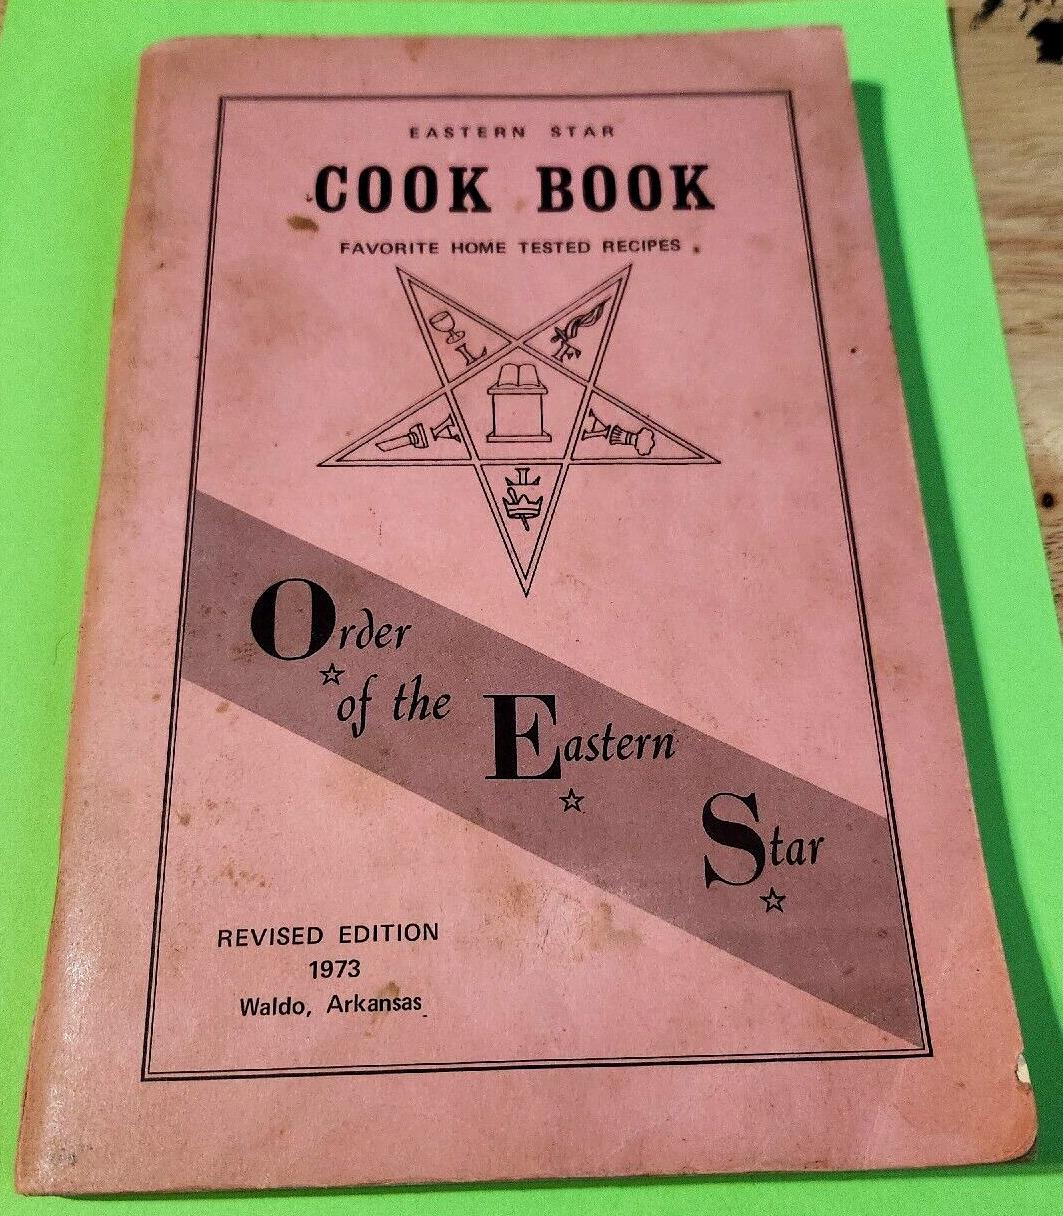 Eastern Star CookBook 1973 waldo arkansas cook book recipe masonic LODGE cocina